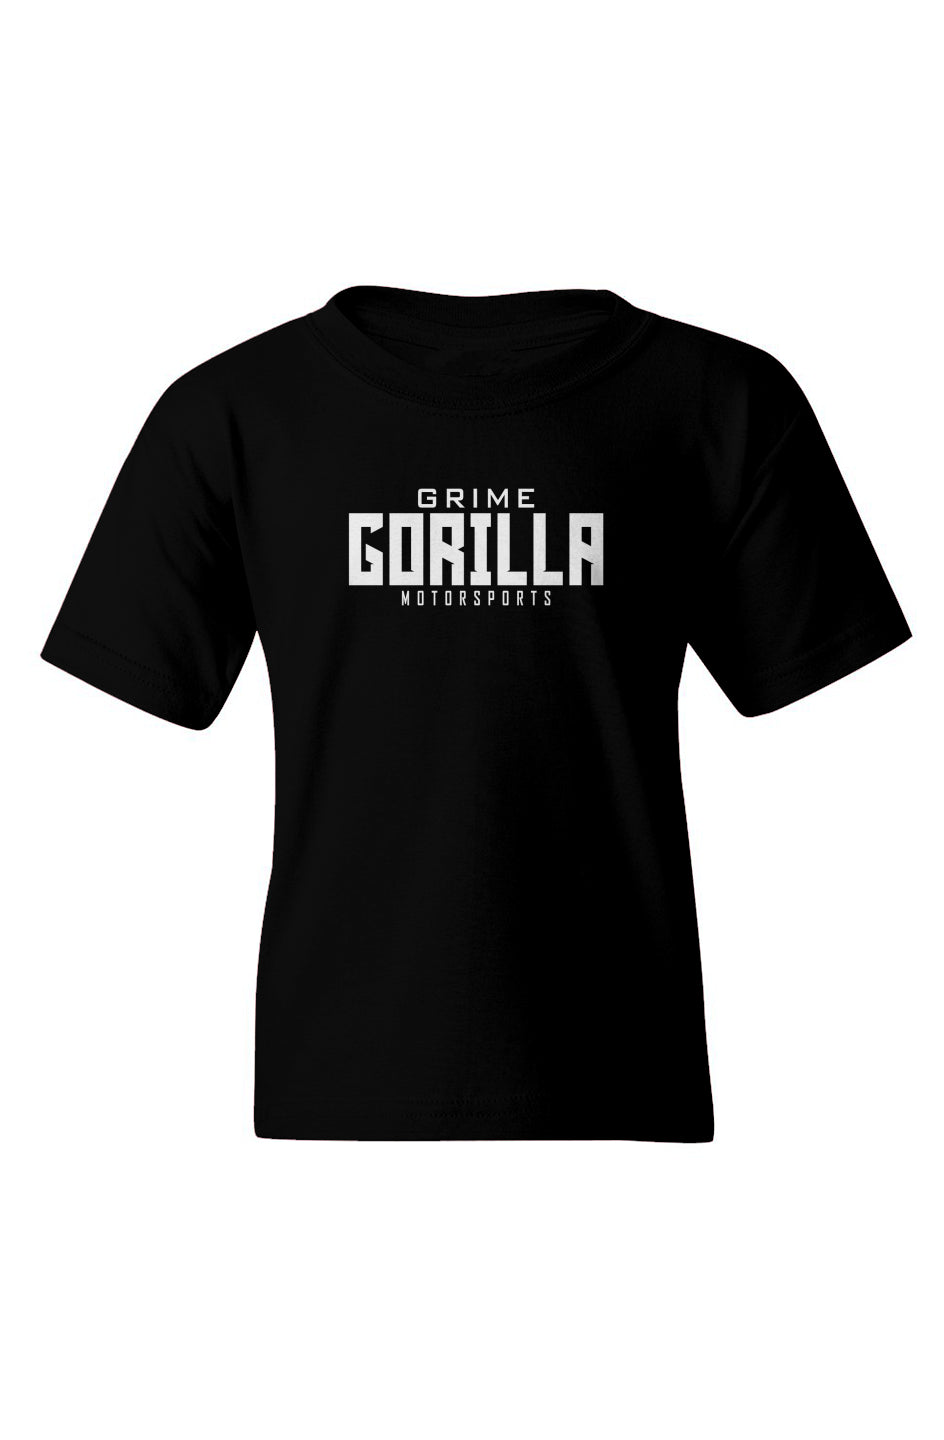 Black and White Design Youth T-Shirt | Grime Gorilla Motorsports